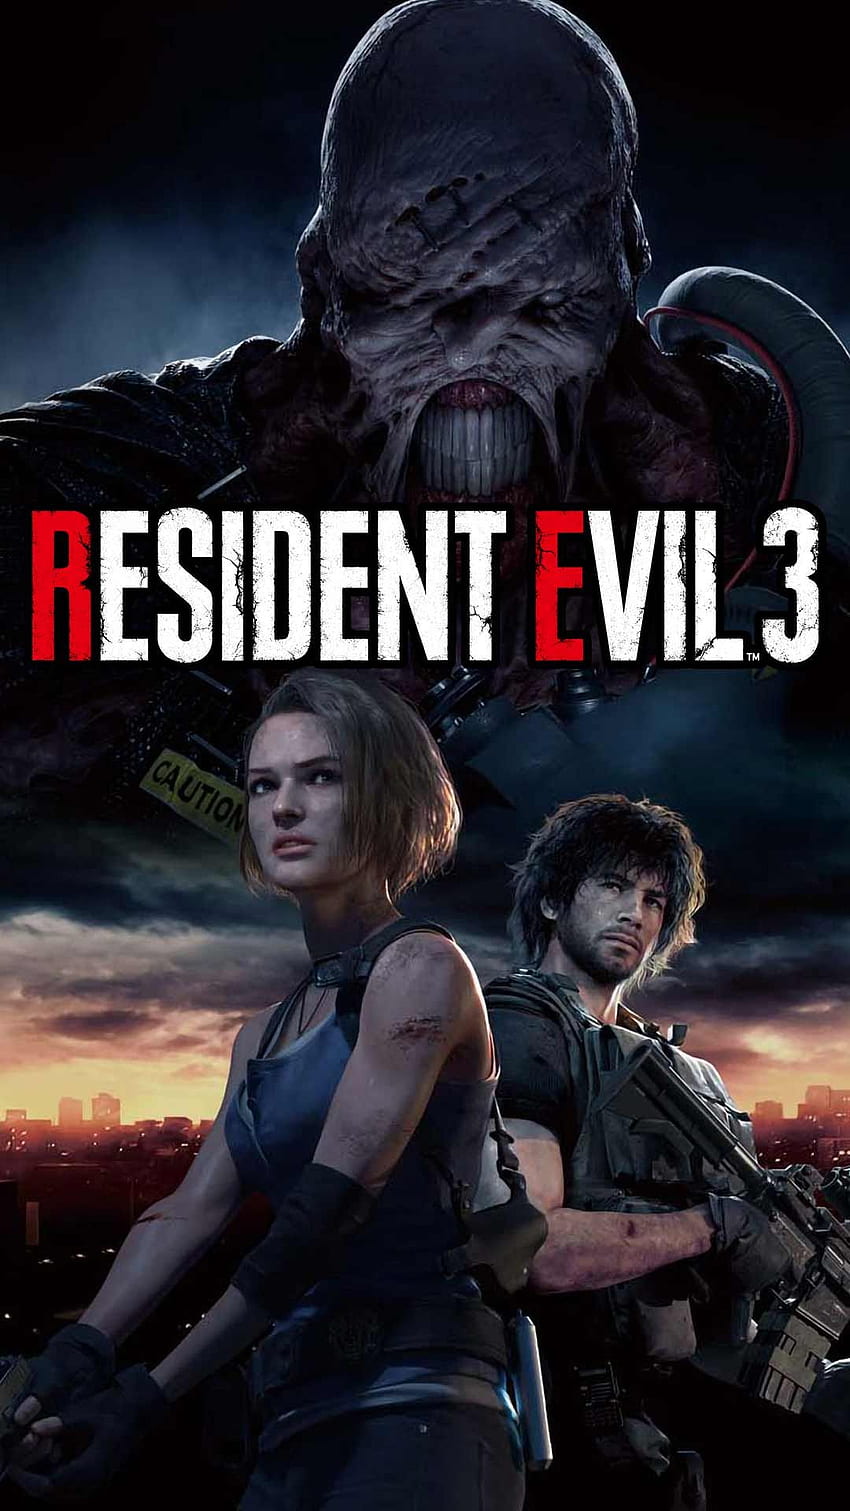 Resident evil 3 remake phone background 2020 PS4 game art Poster en iPhone android. Resident evil 3 remake, Resident evil, Resident evil juego, Resident Evil 3 Teléfono fondo de pantalla del teléfono